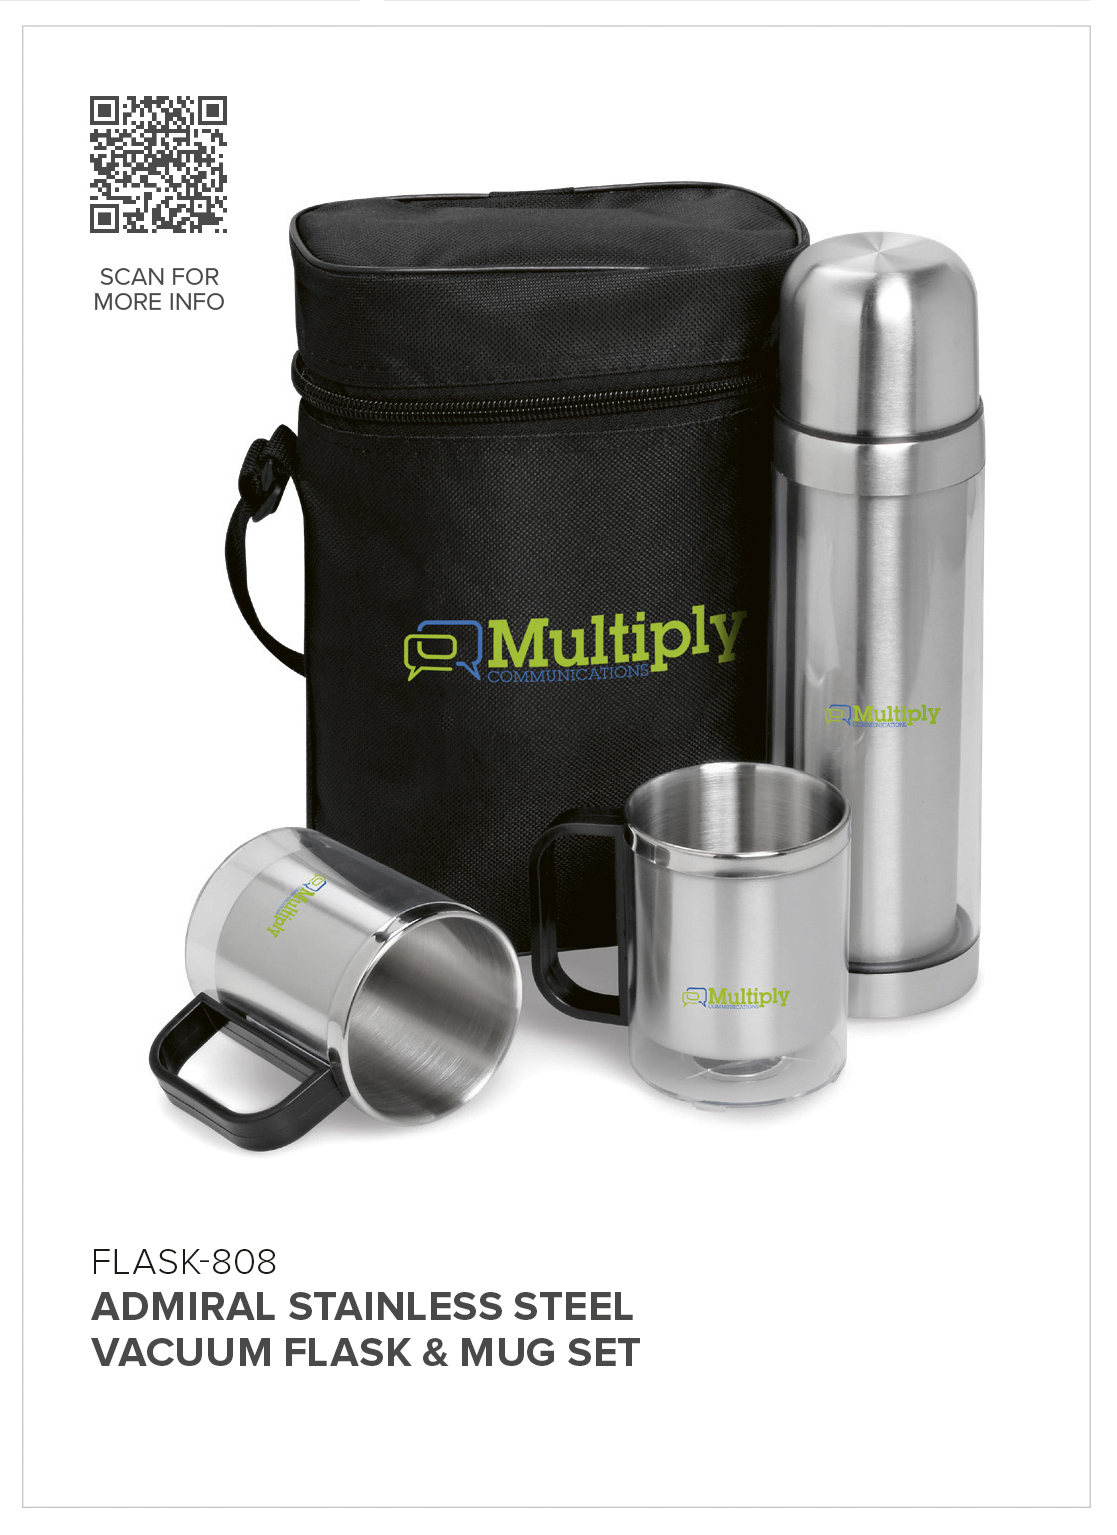 FLASK-808 - Admiral Stainless Steel Vacuum Flask & Mug Set - Catalogue Image